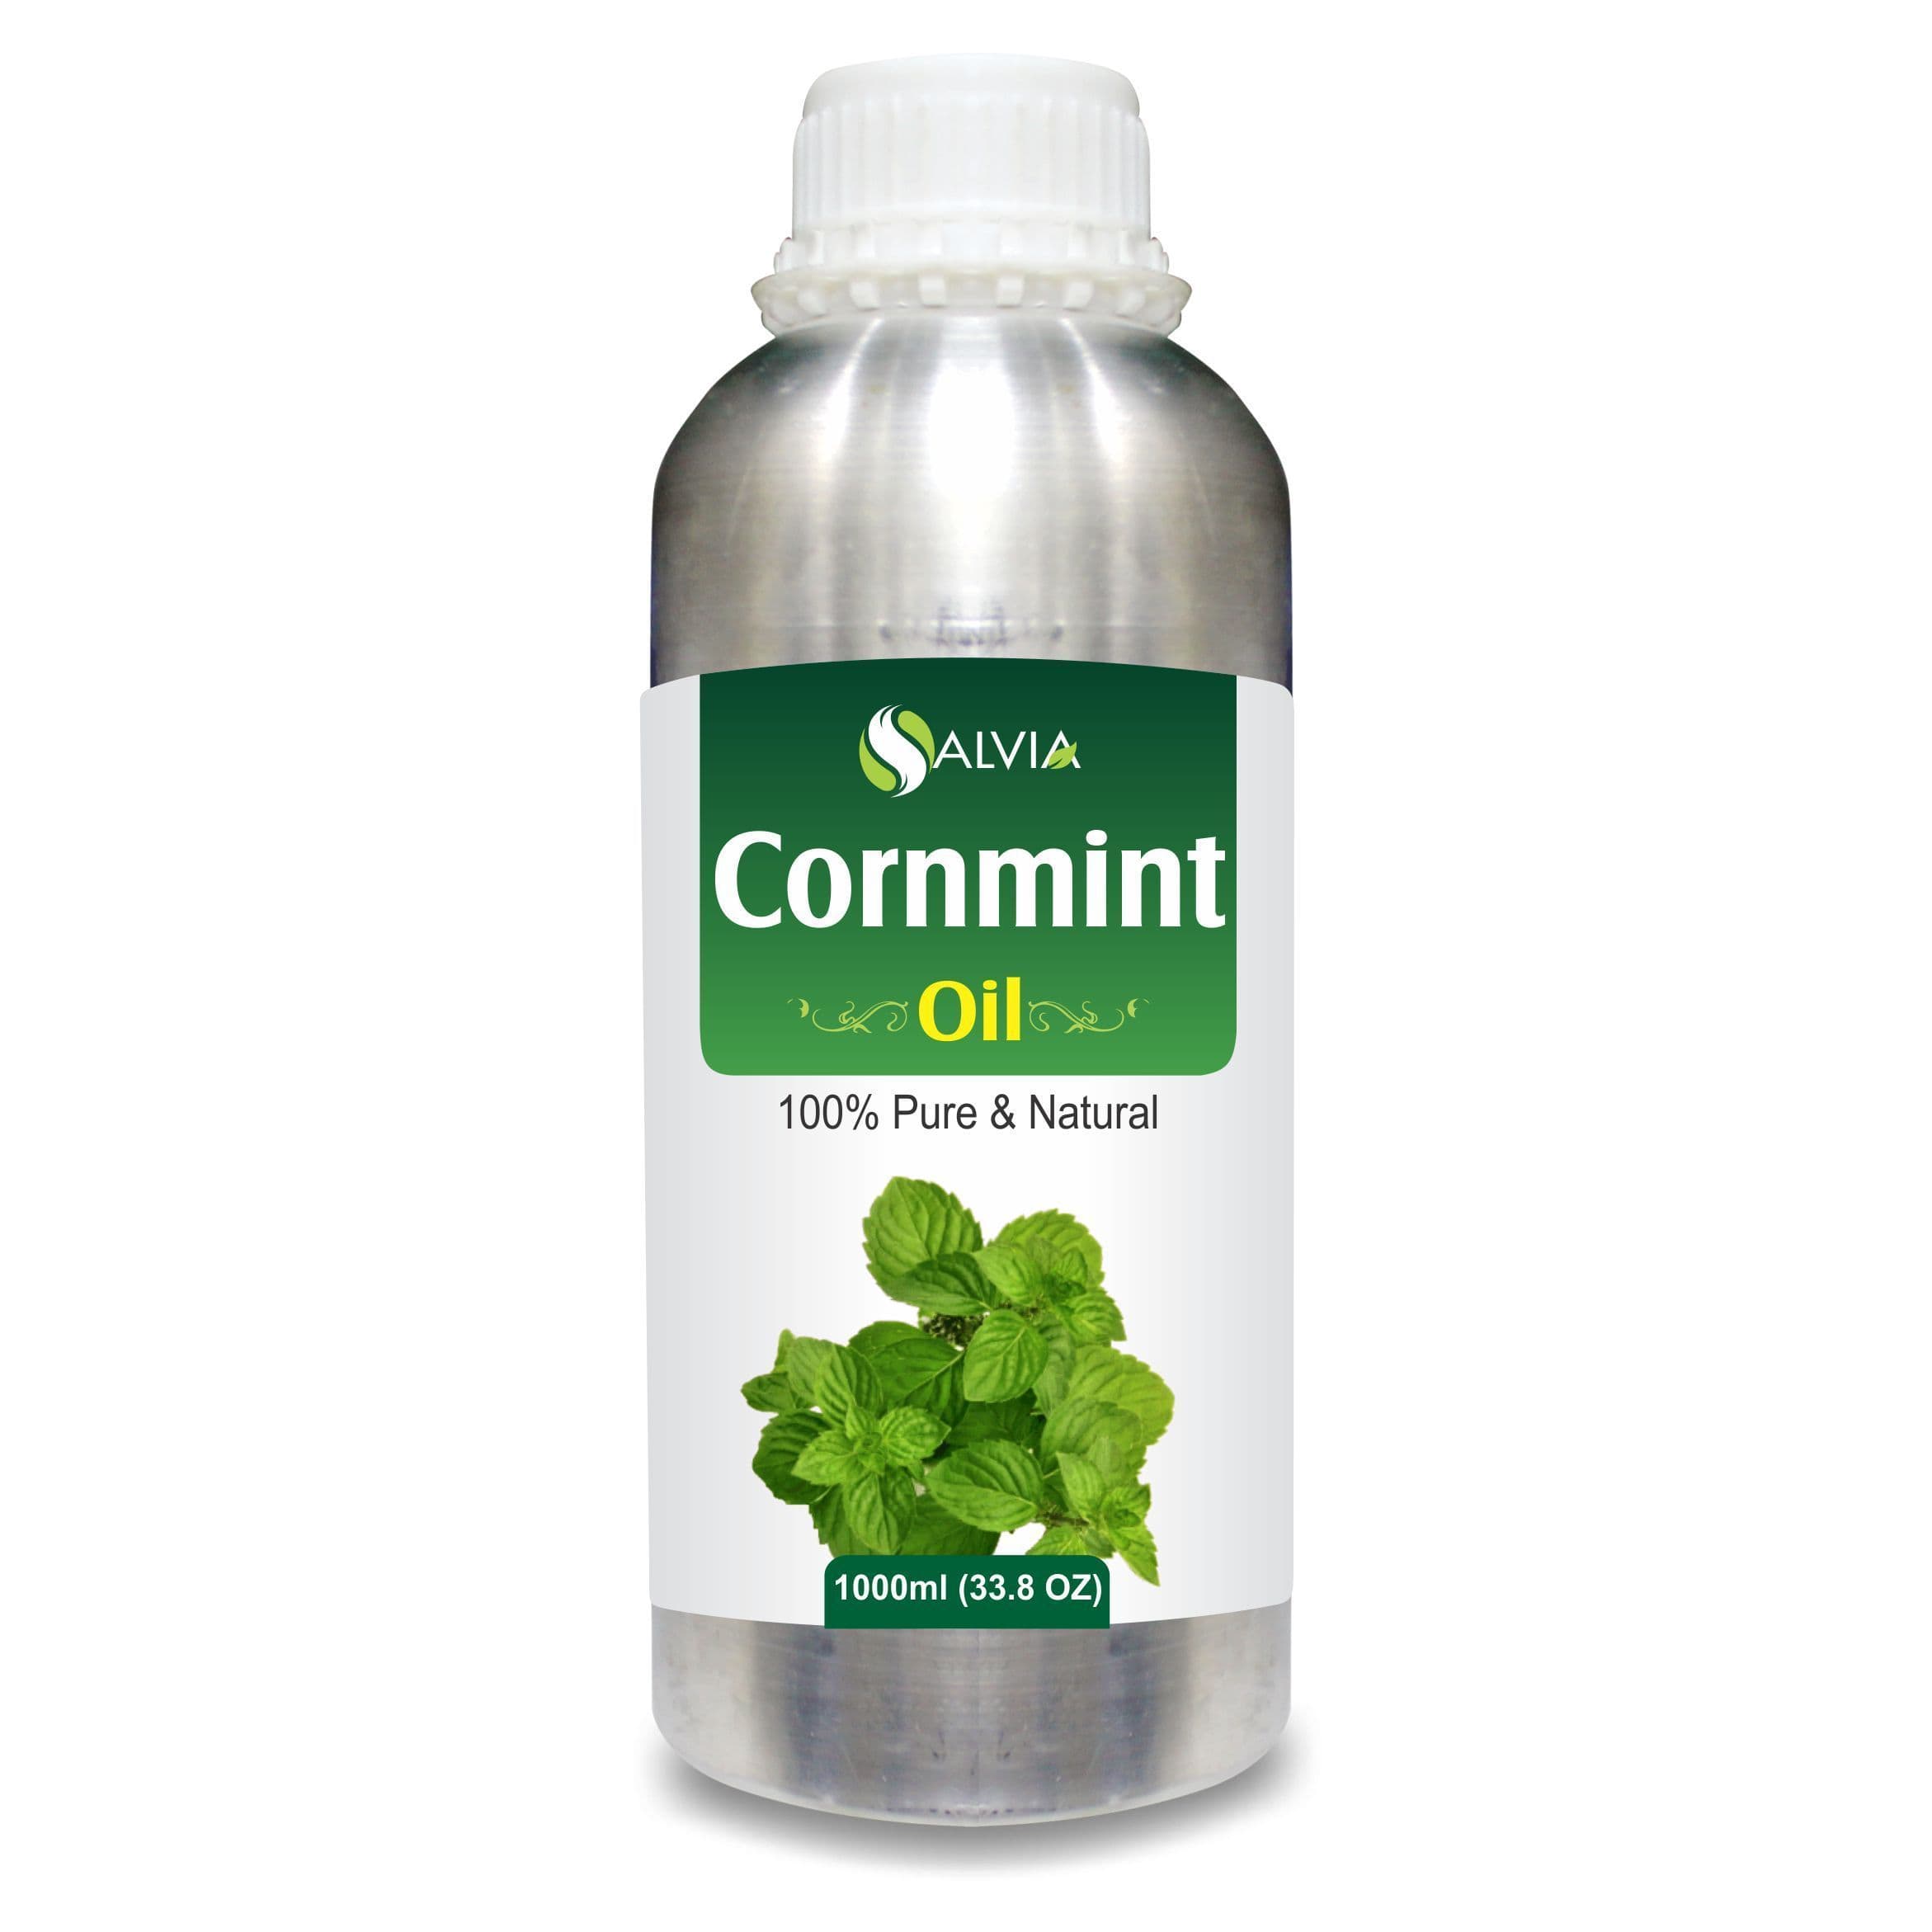 cornmint oil good scents